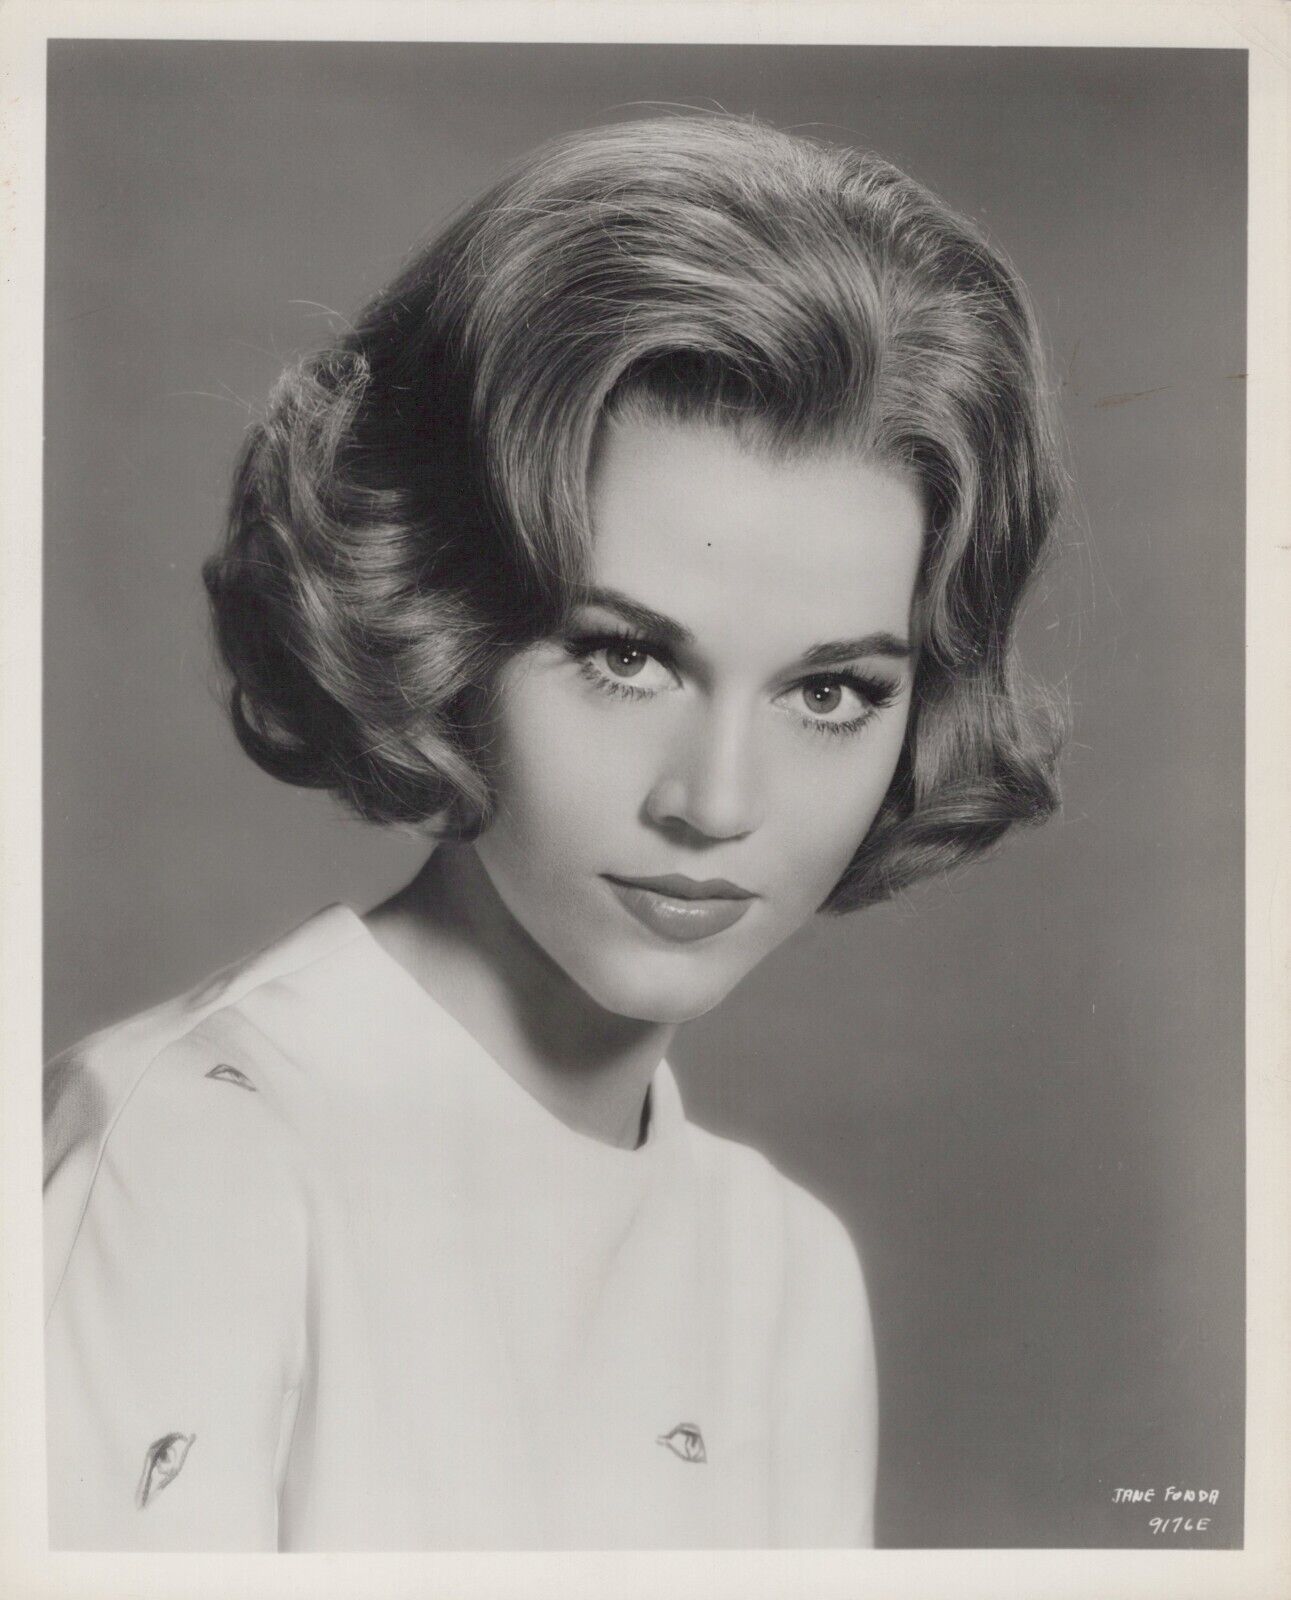 HOLLYWOOD BEAUTY JANE FONDA STYLISH POSE STUNNING PORTRAIT 1960s Photo C43